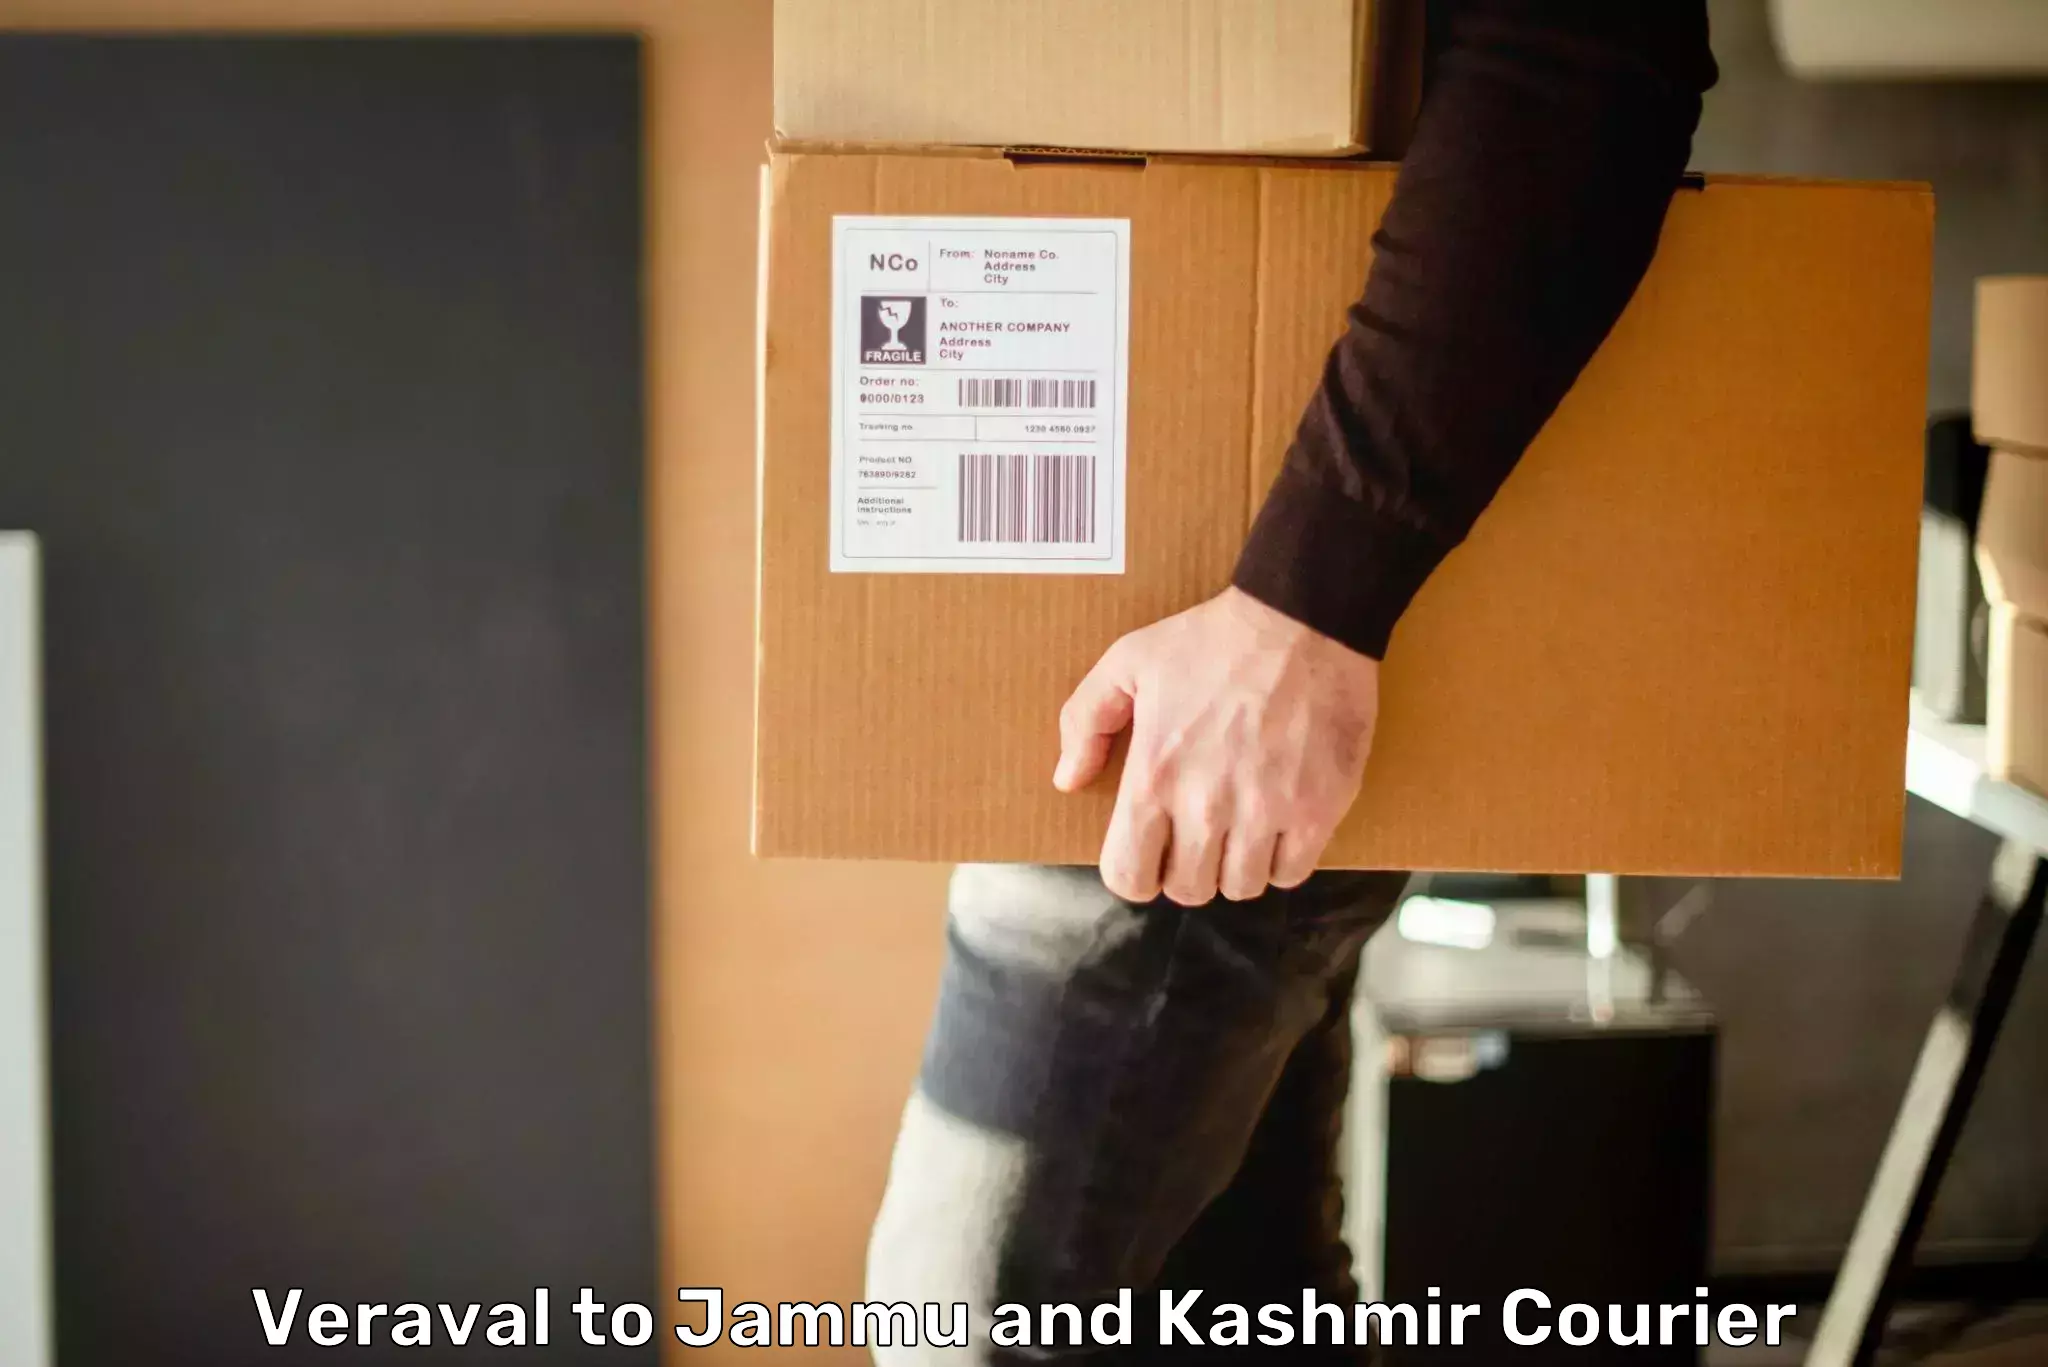 Supply chain efficiency Veraval to Srinagar Kashmir